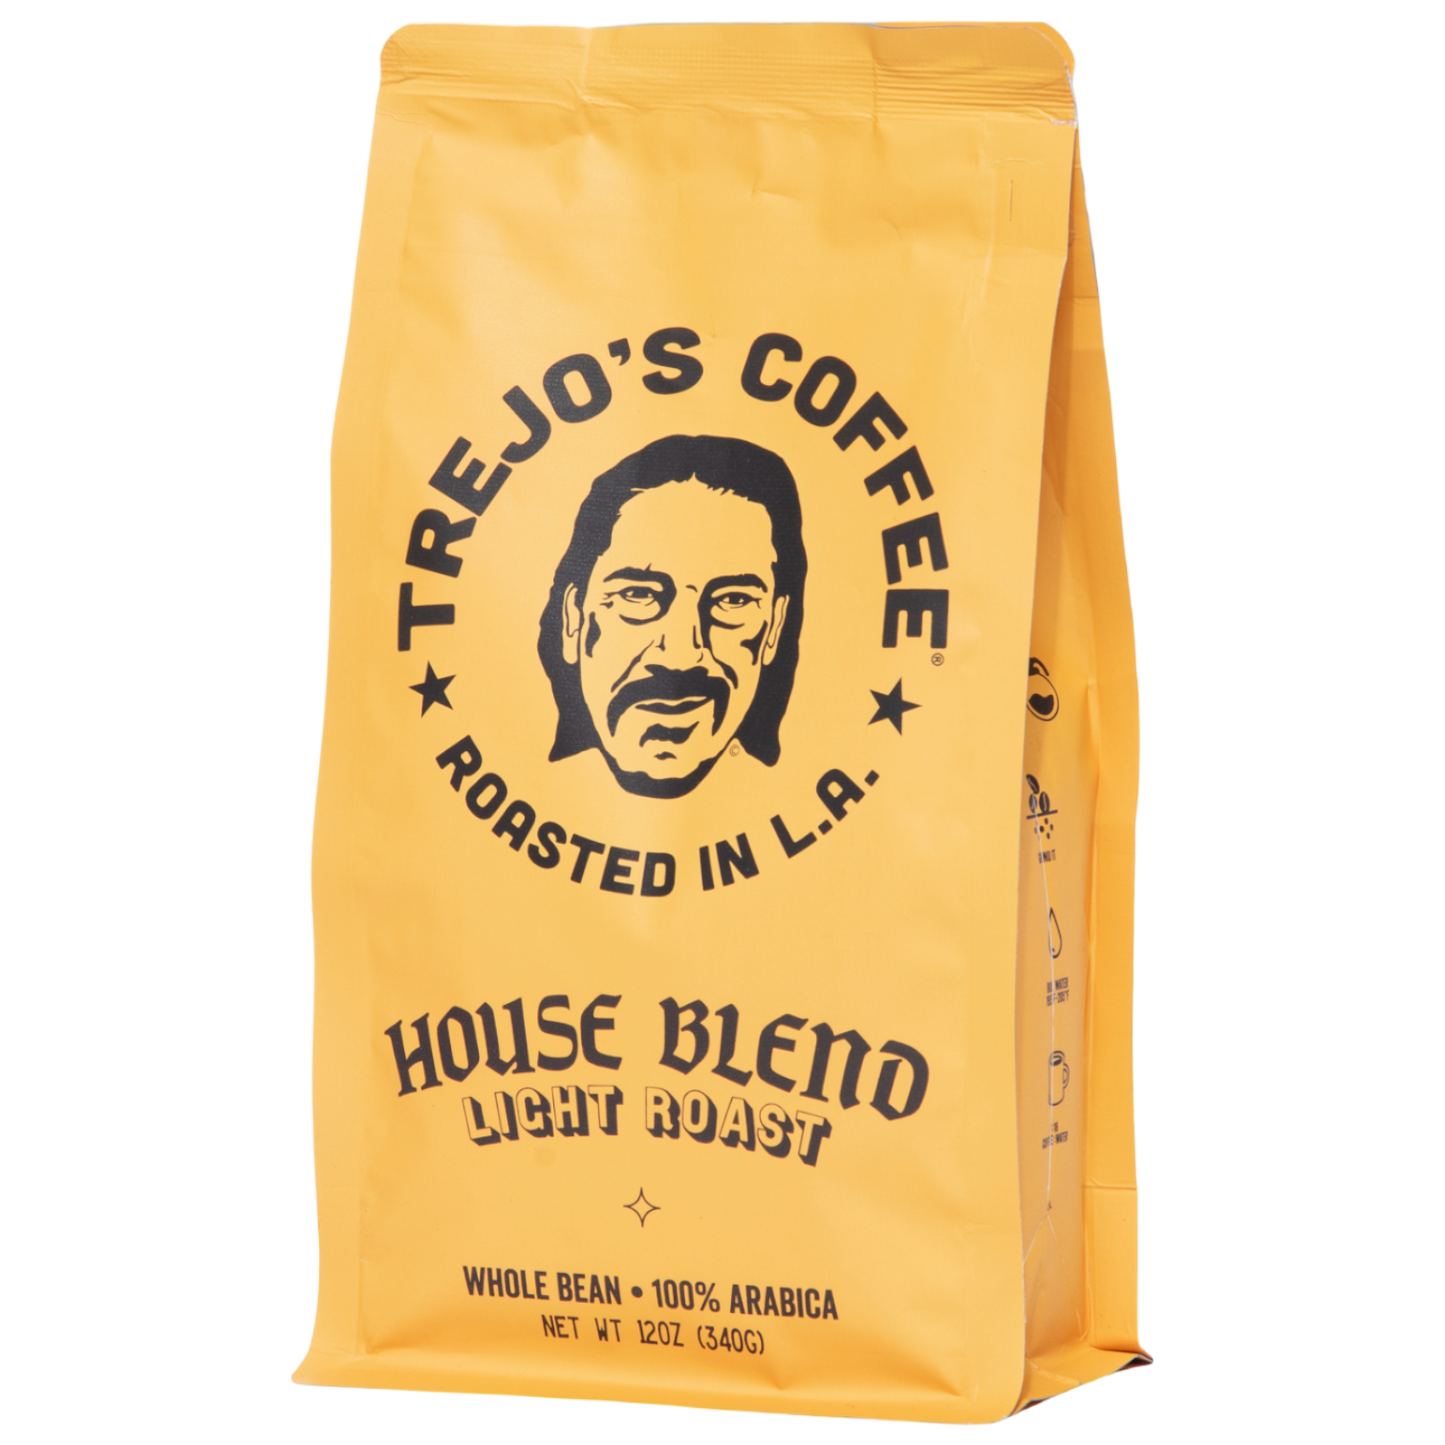 Trejo's Tacos - House Blend Whole Bean Coffee - Light Roast - 12oz